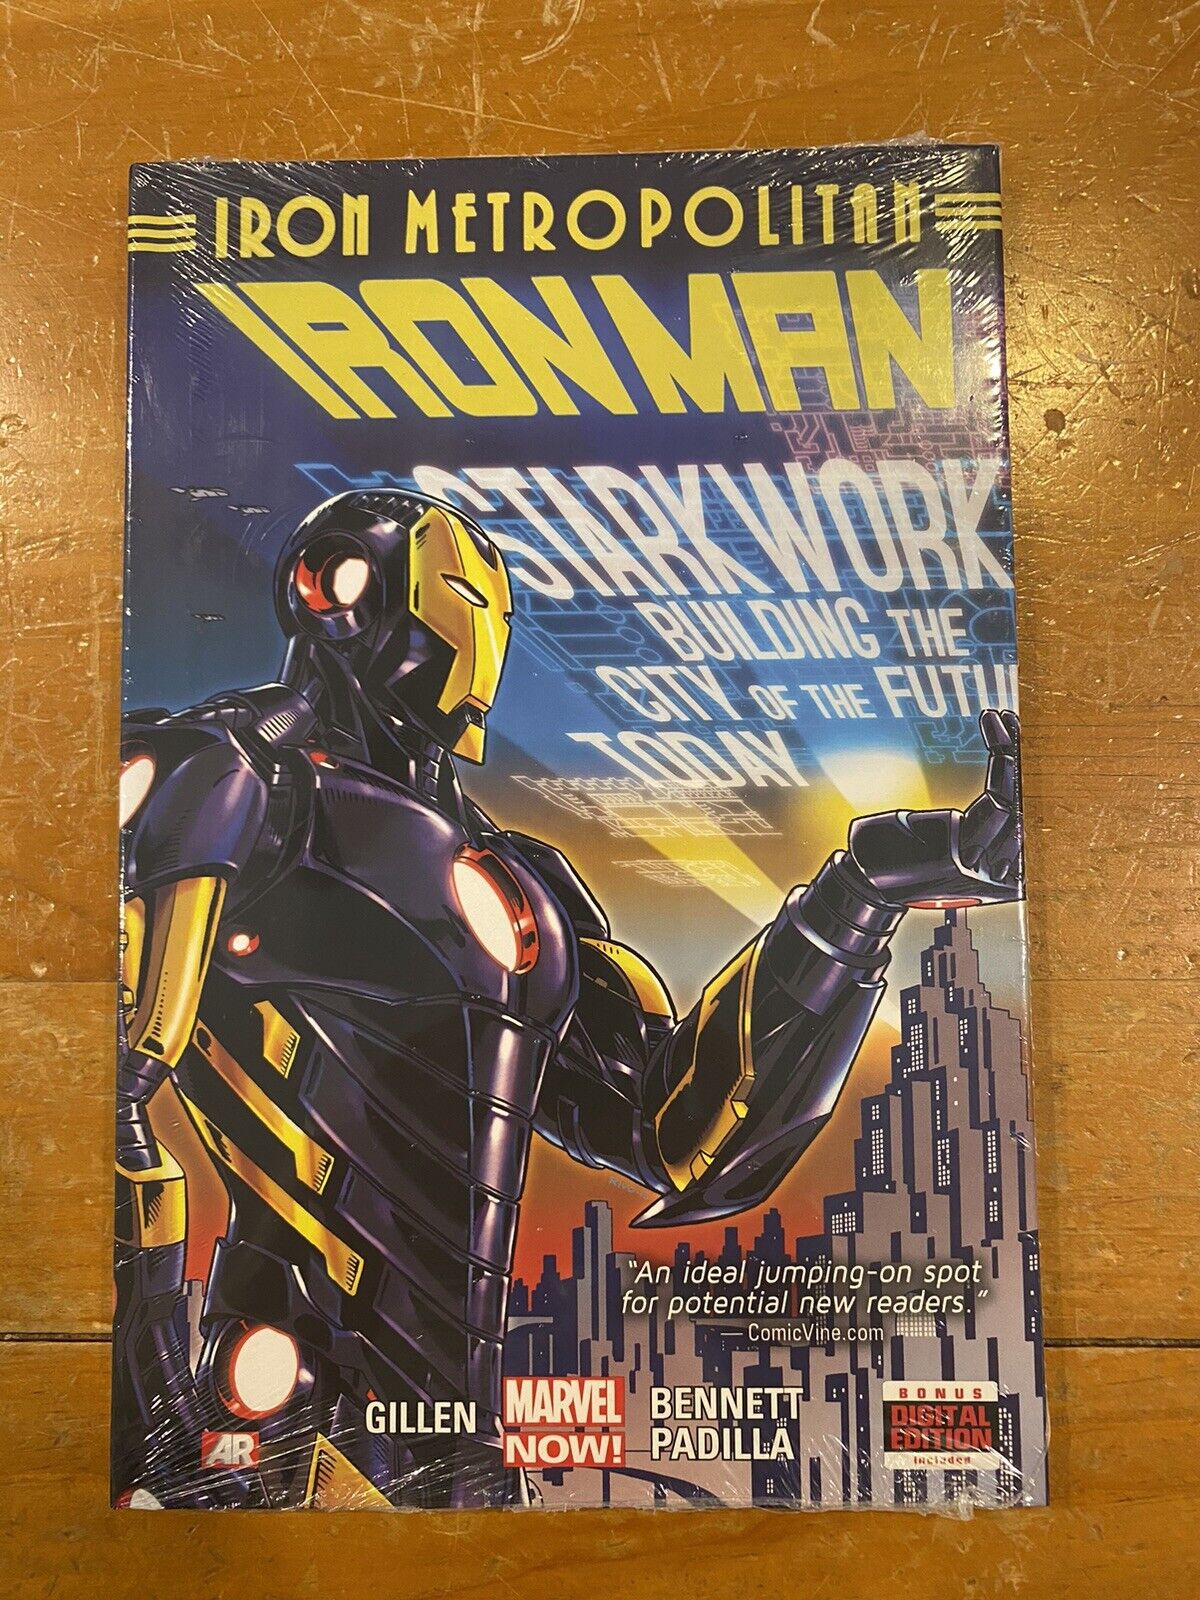 Iron Man HC Vol 4: Iron Metropolitan (Marvel 2015) by Gillen